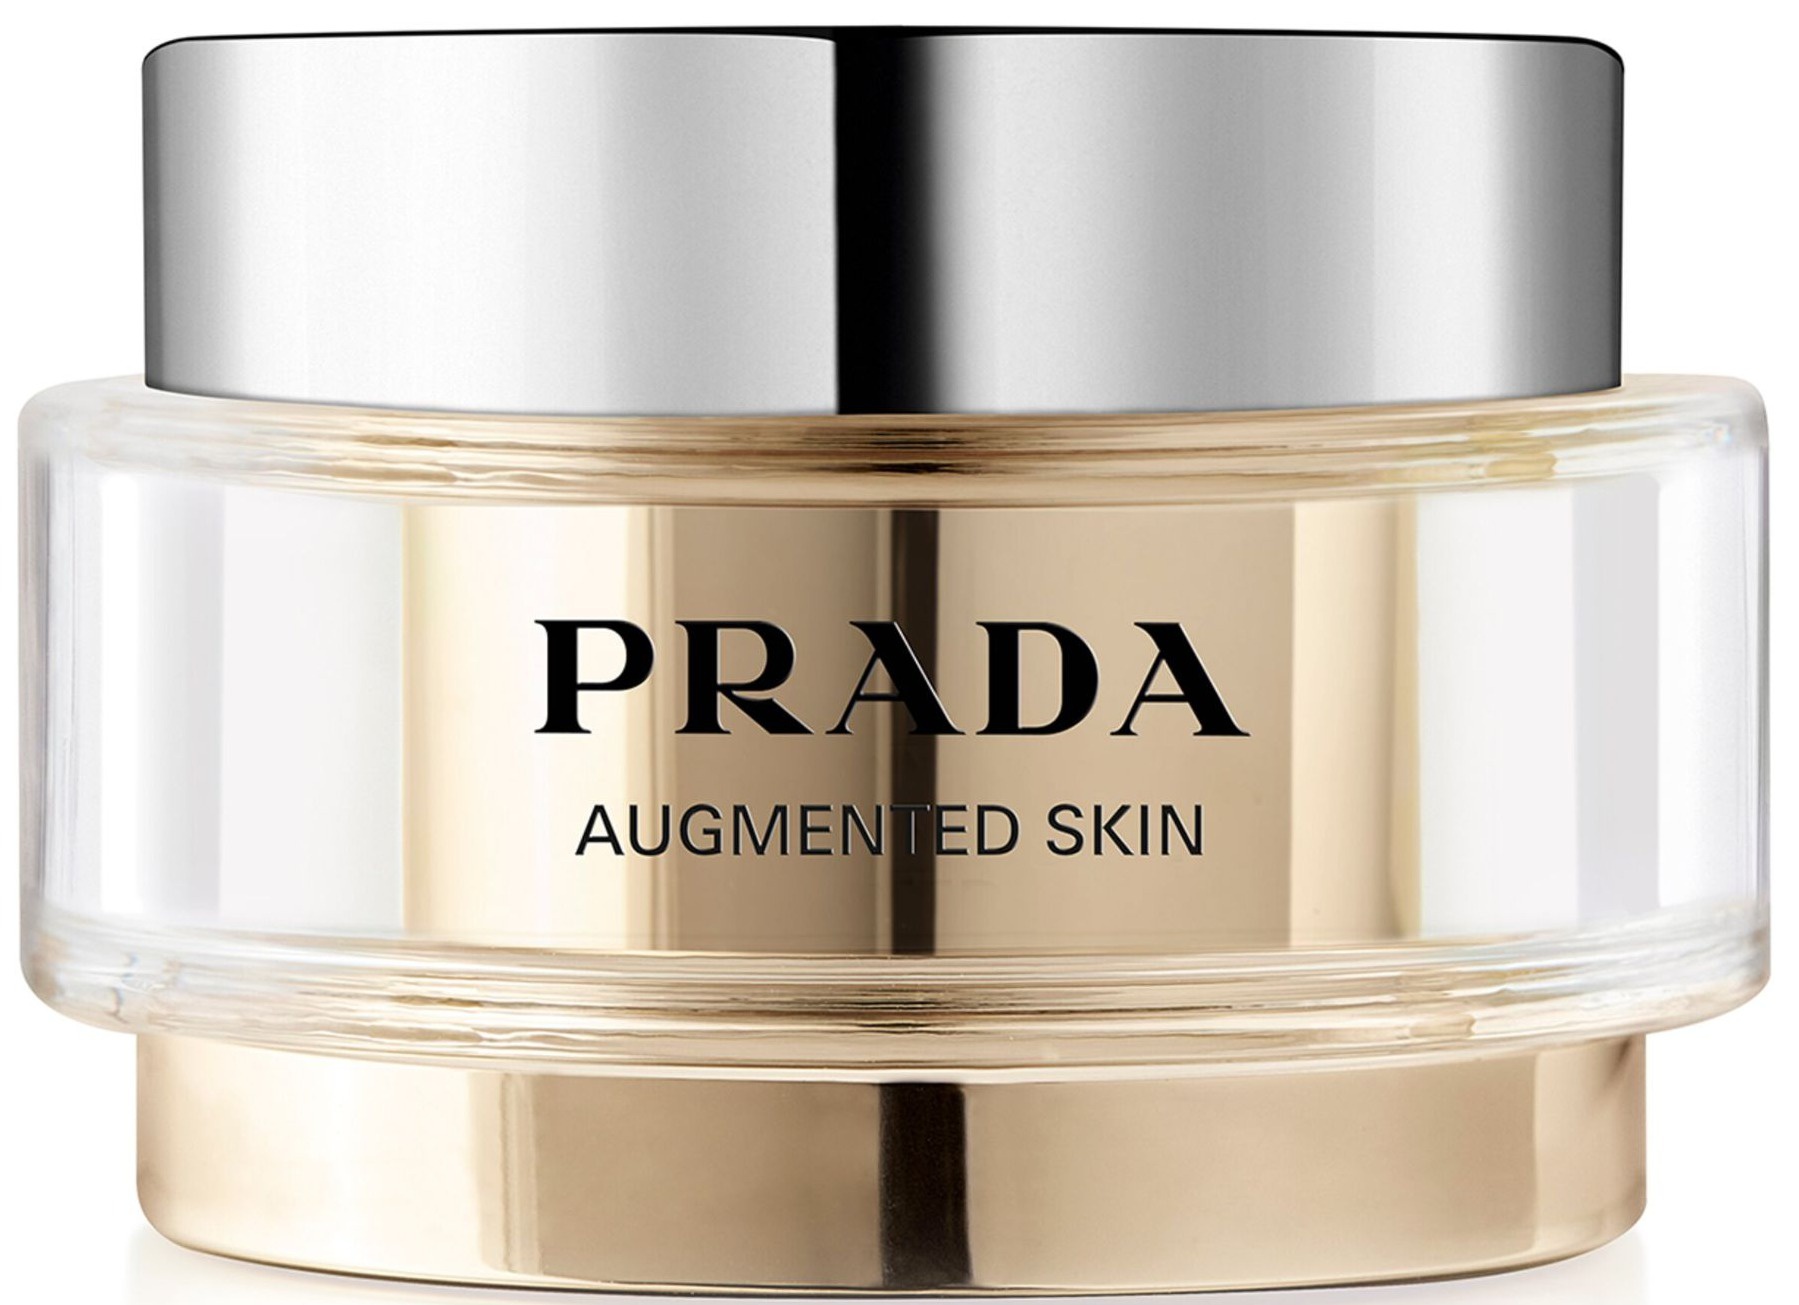 Prada Augmented Skin - The Cream